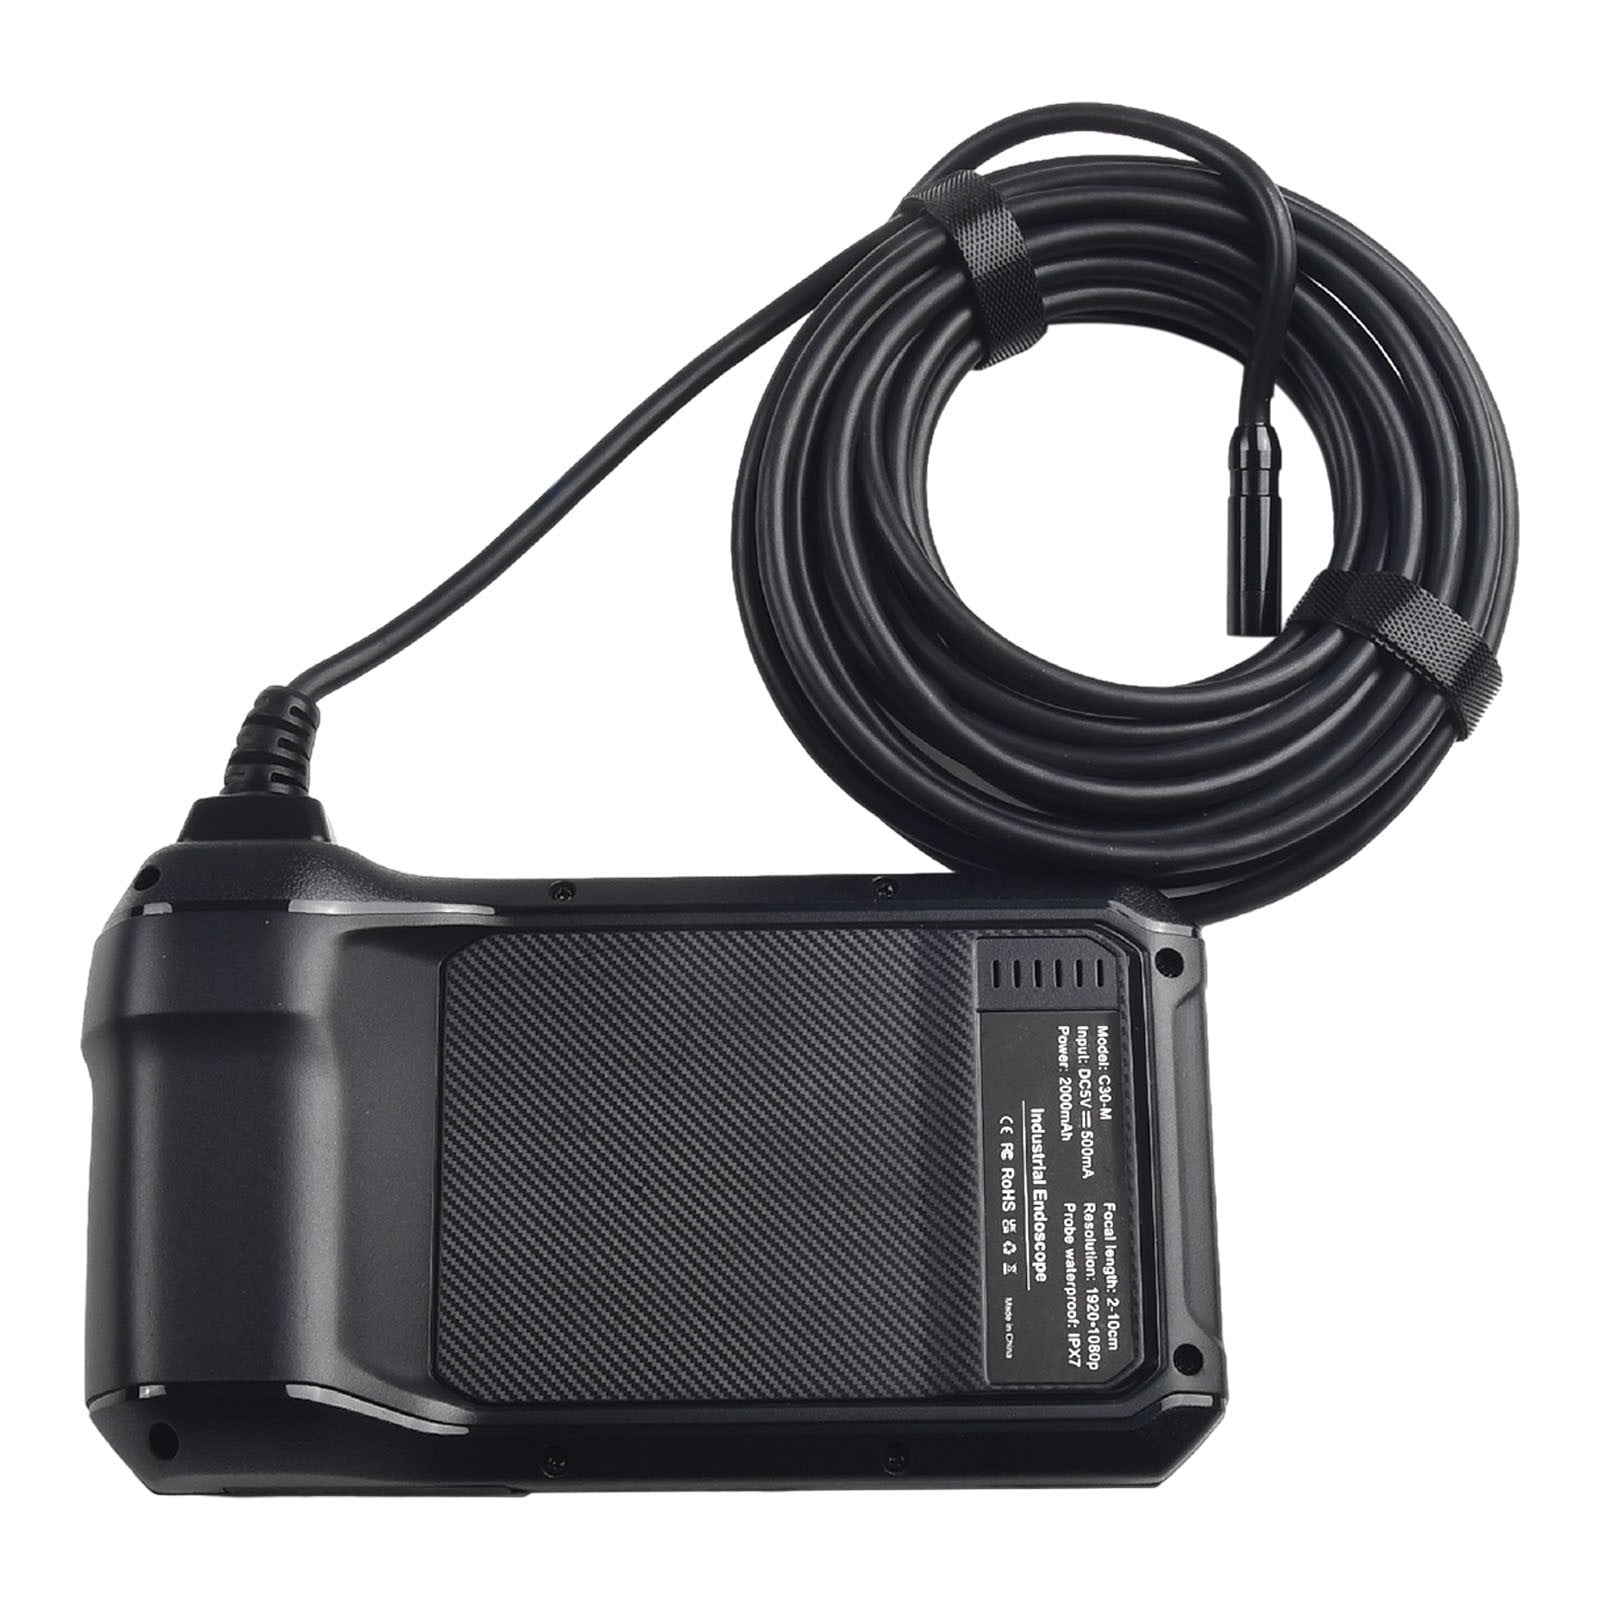 Lightswim Industrial Endoscope Inspection Camera, 4.3″ IPS